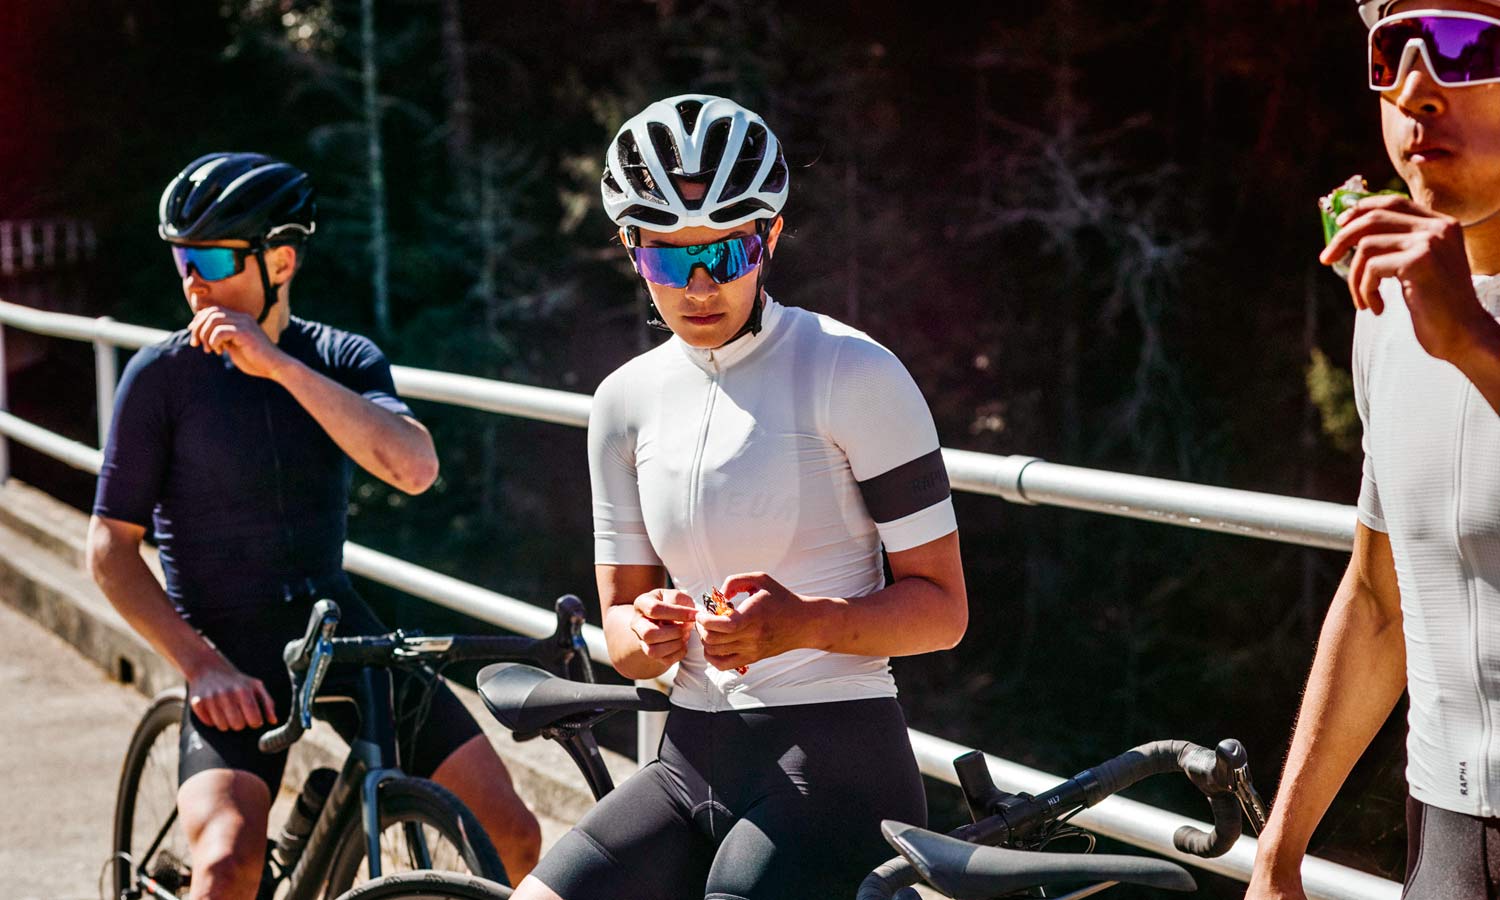 https://bikerumor.com/wp-content/uploads/2020/06/All-new-Rapha-cycling-sunglasses_Pro-Team-race-Explore-gravel-Classic-road-bike-cycling-sunglasses_group-ride.jpg